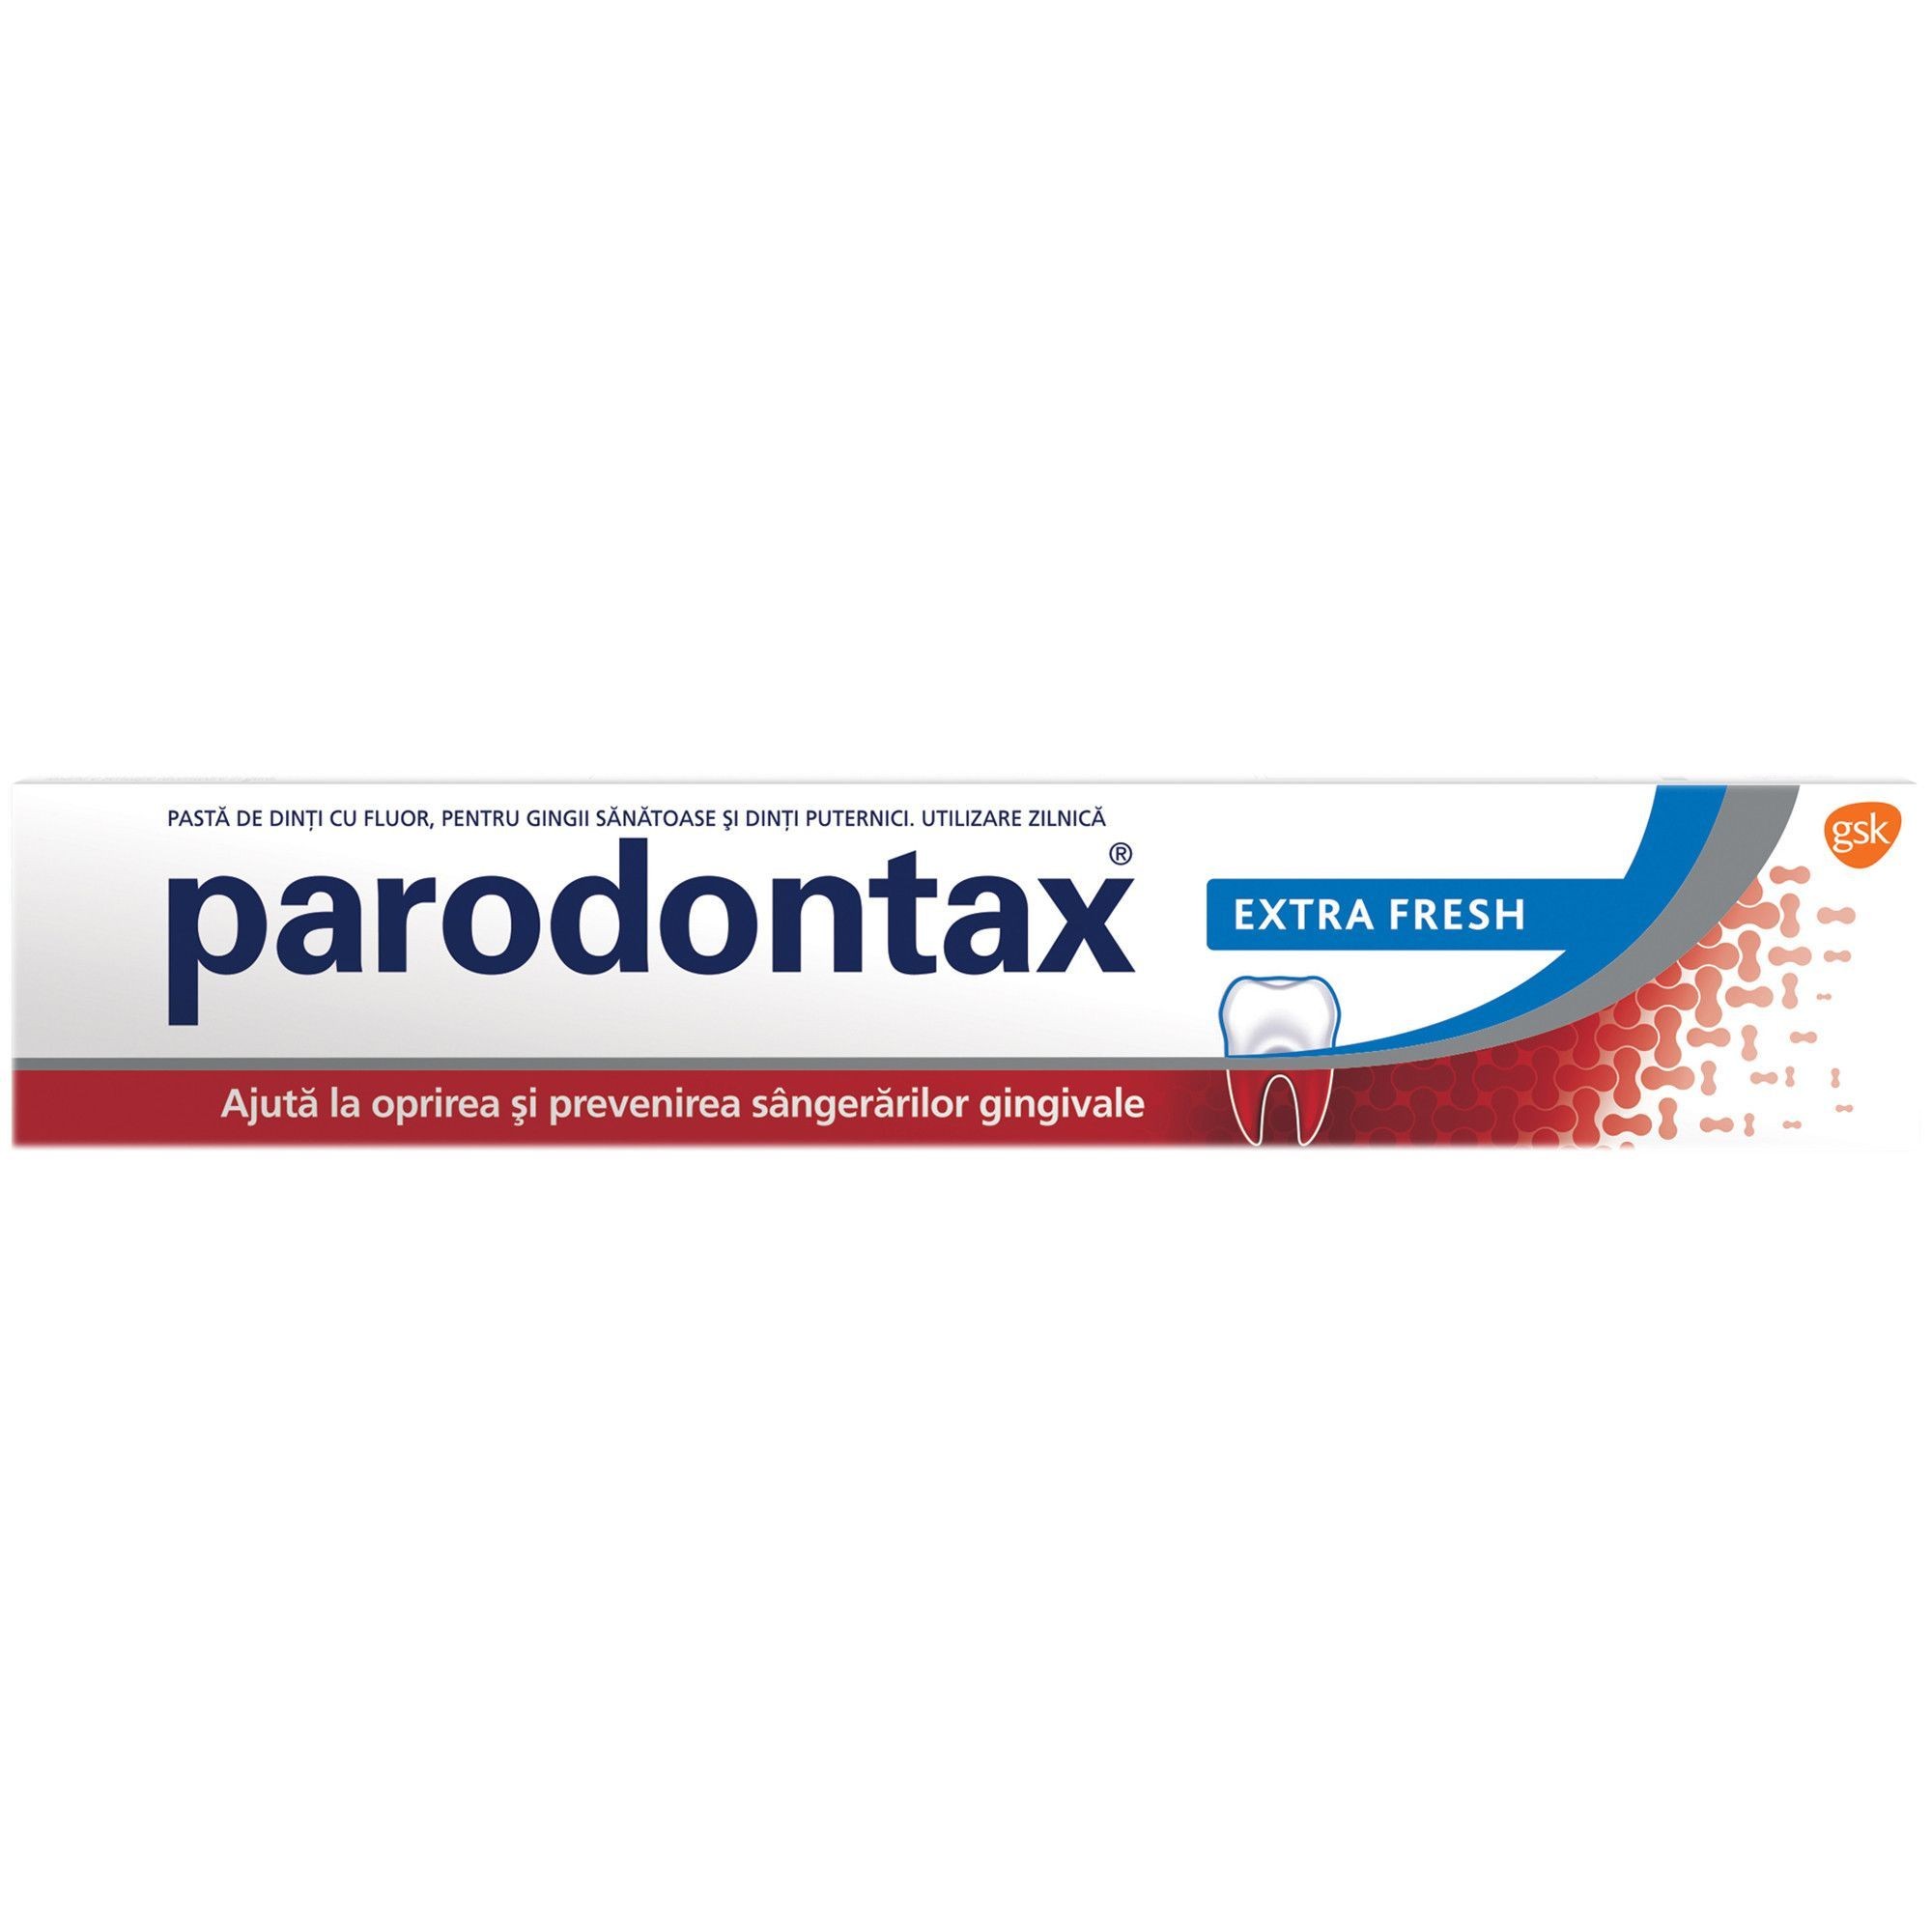 Pastă de dinți - PARODONTAX EXTRA FRESH PASTA DE DINTI 75 ML, axafarm.ro